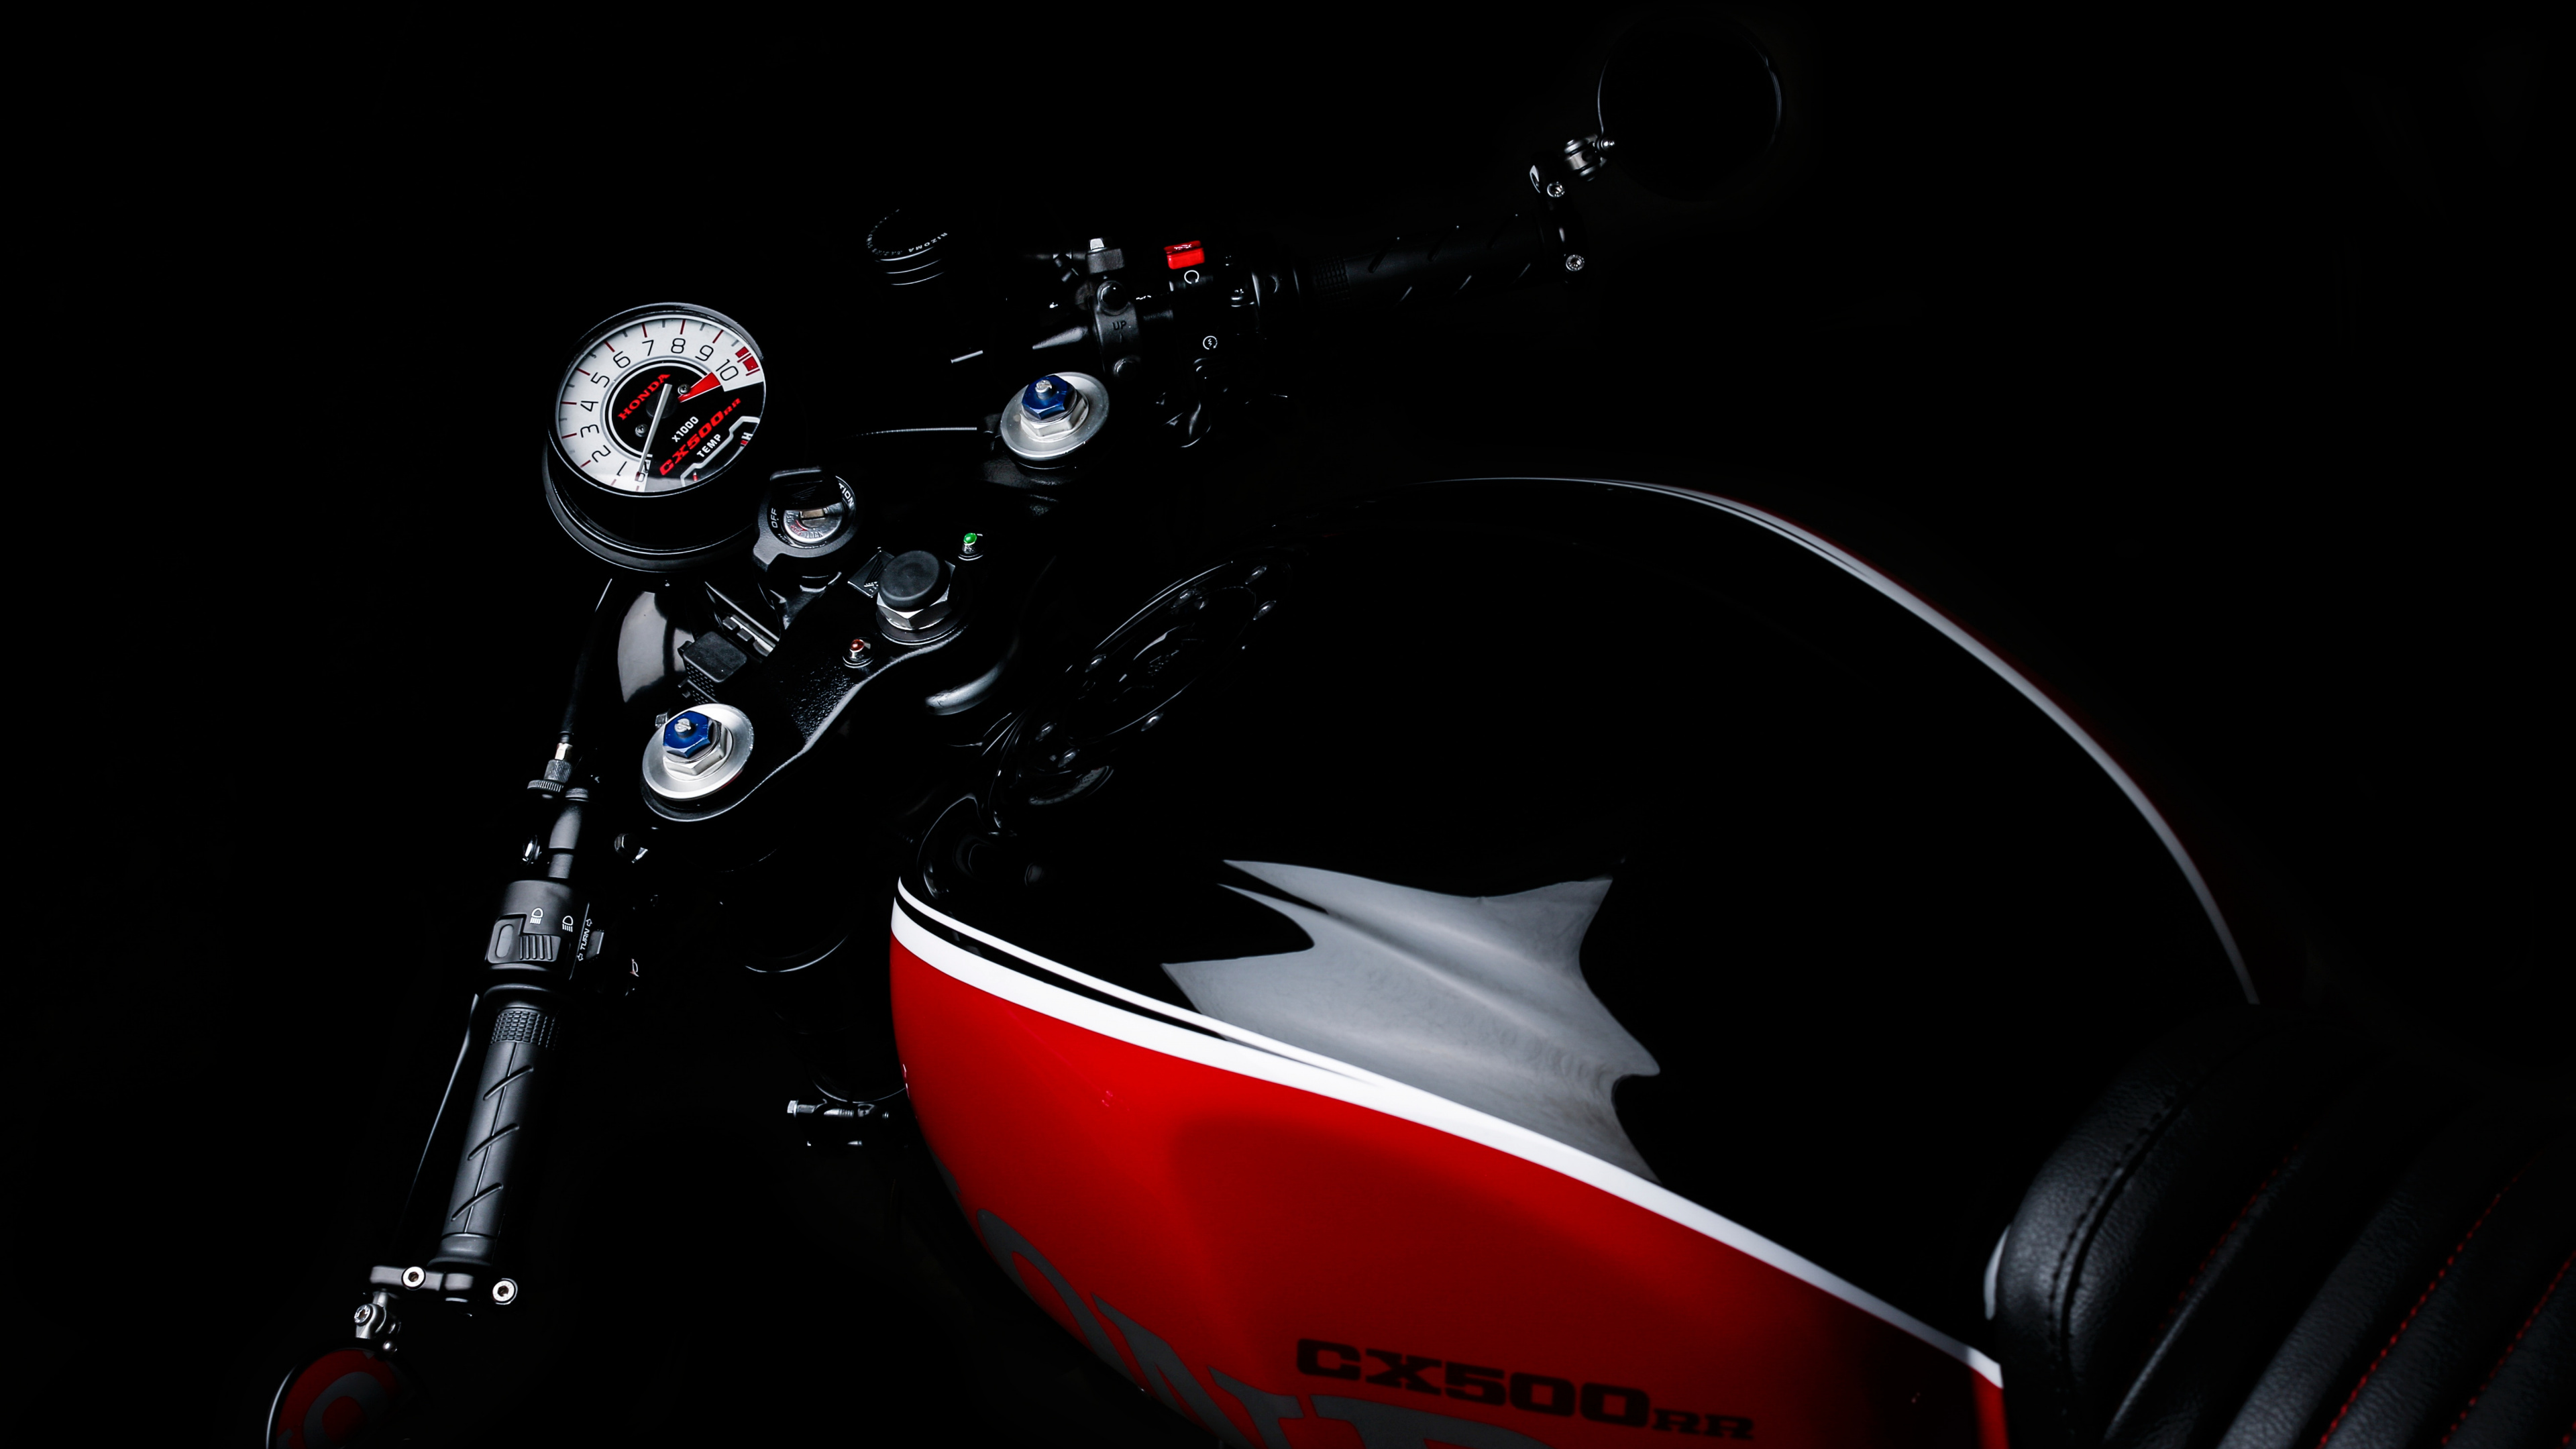 Rotes Und Schwarzes Honda-Motorrad. Wallpaper in 3840x2160 Resolution